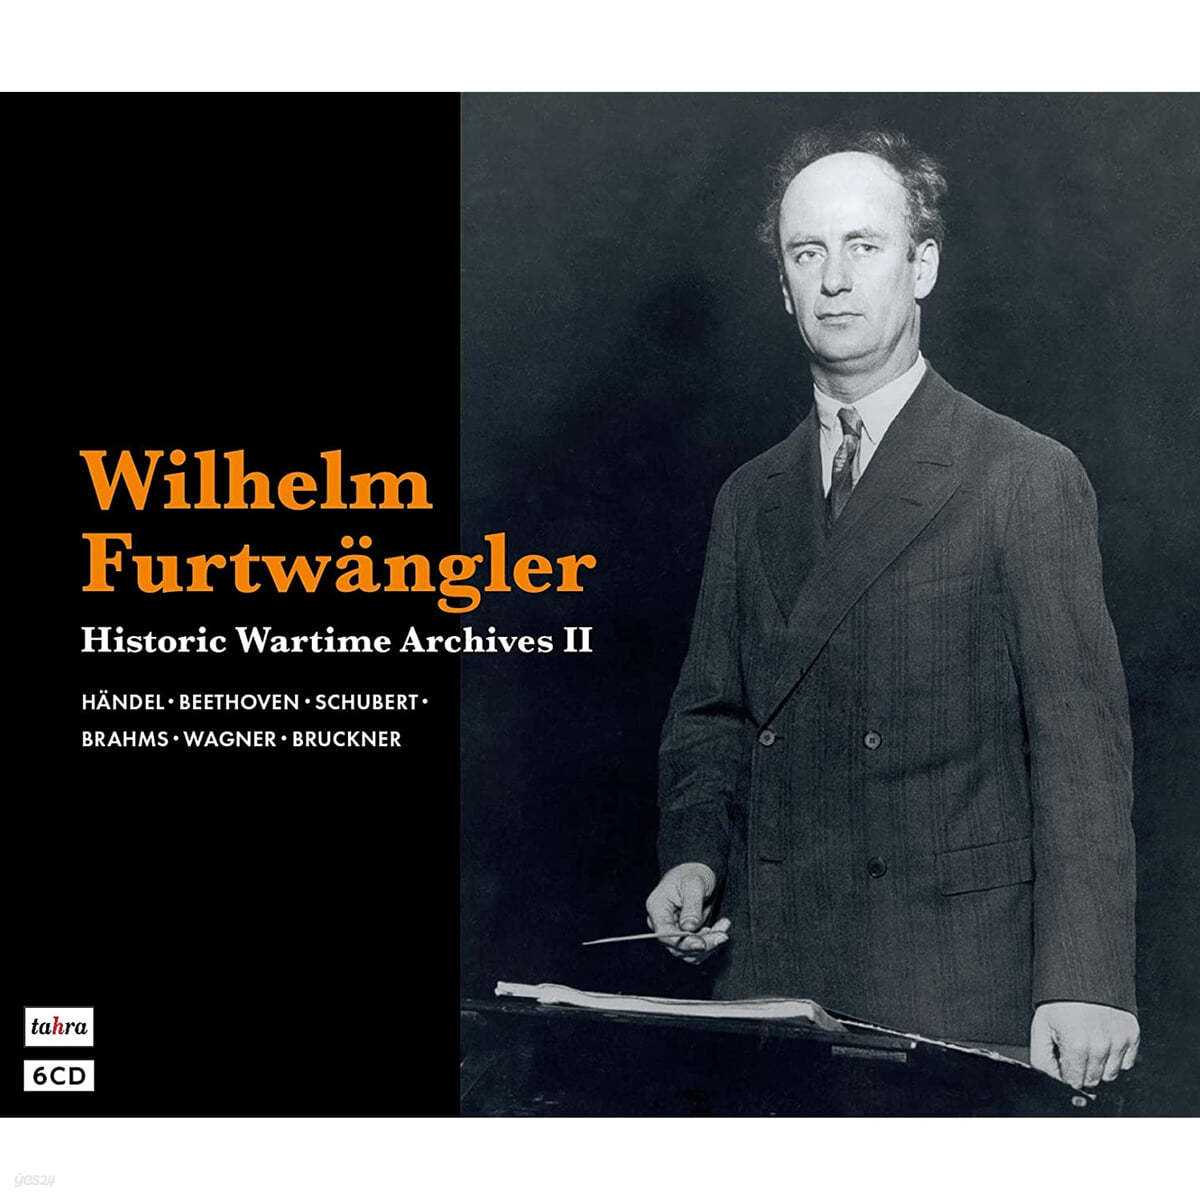 Wilhelm Furtwangler 푸르트뱅글러 - 세계대전 기간의 타라 레이블 명연 2집 (Historic Wartime Archives II) 